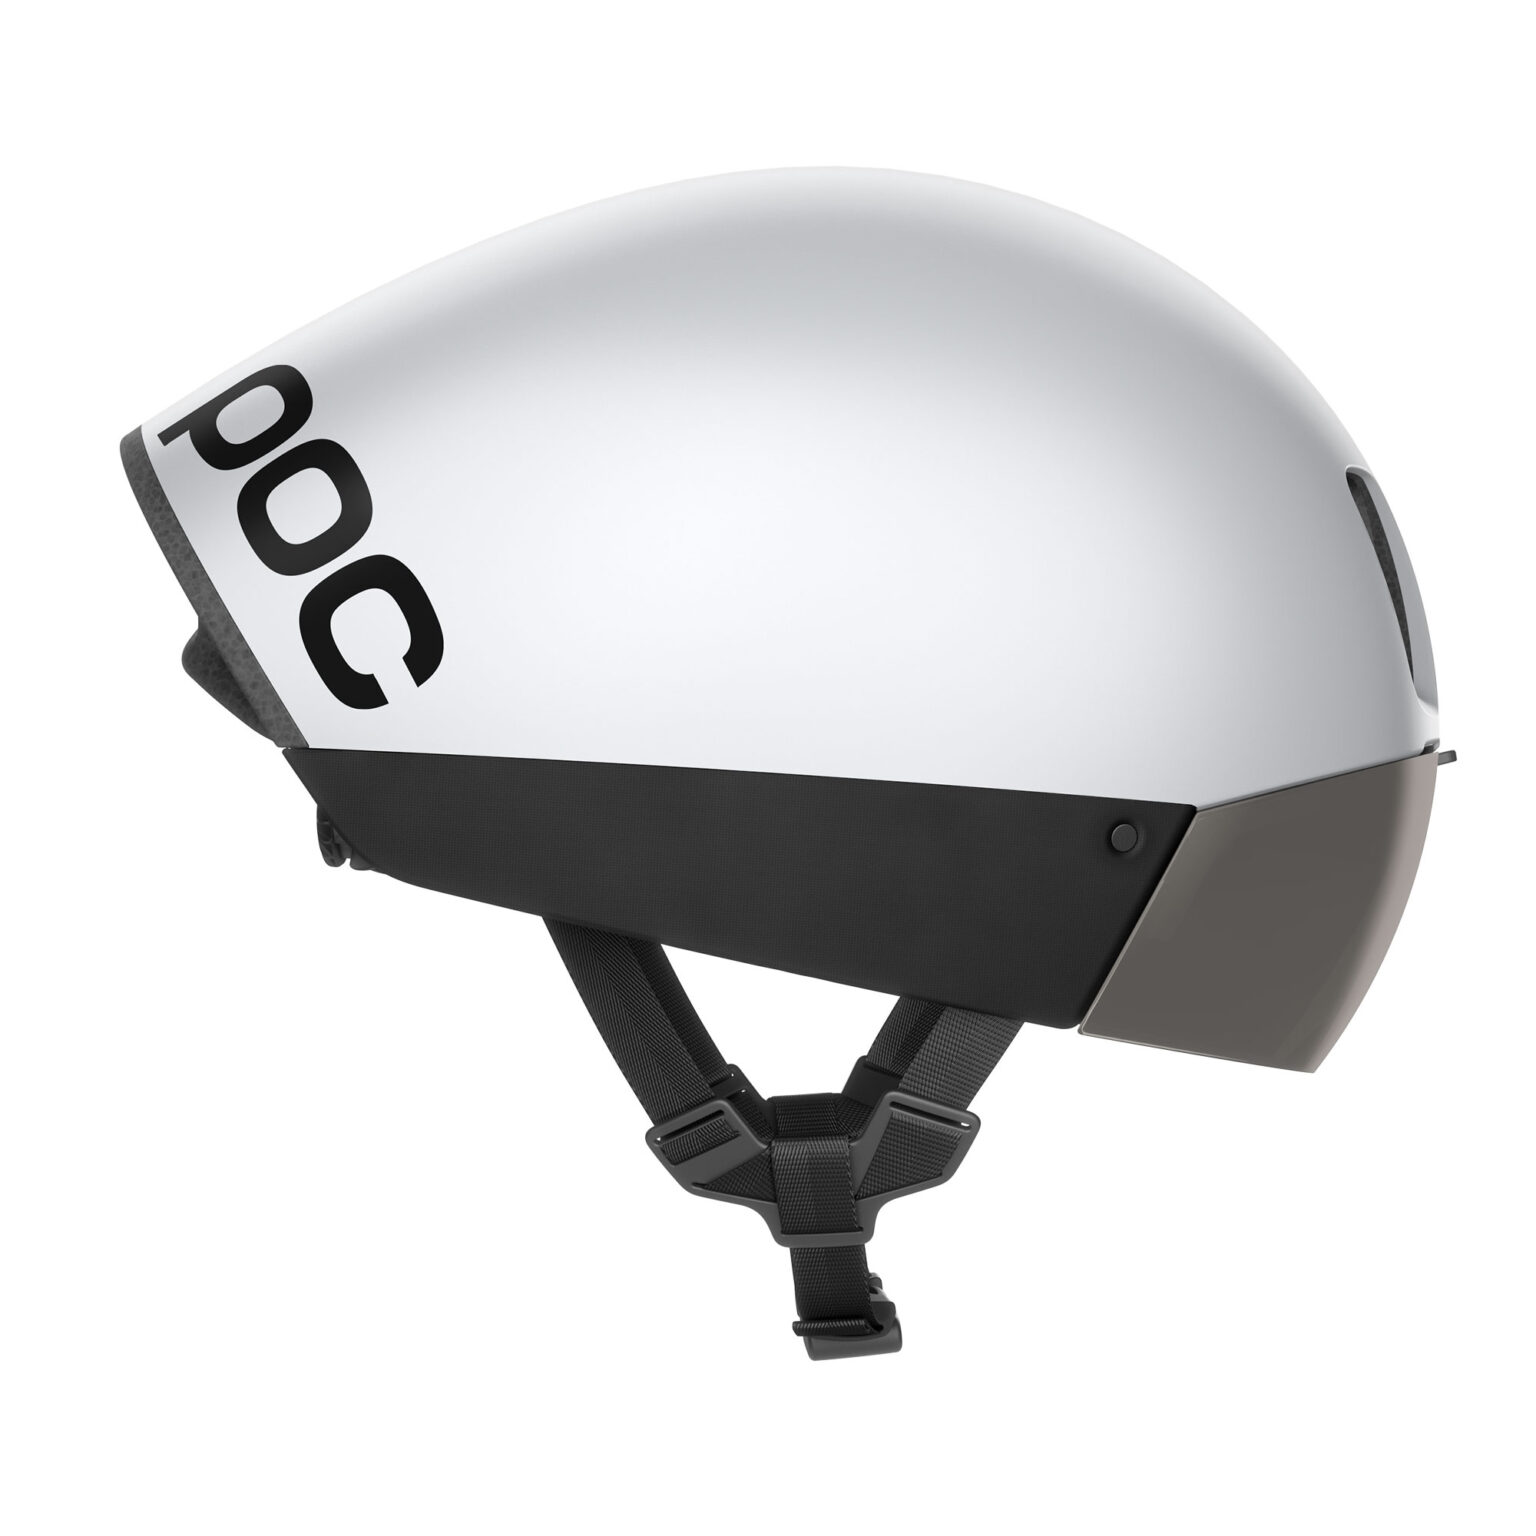 POC-Procen-Air-mini-aero-road-race-helmet-inspired-by-TT-aerodynamics_Hydrogen-White-1536x1536.jpg